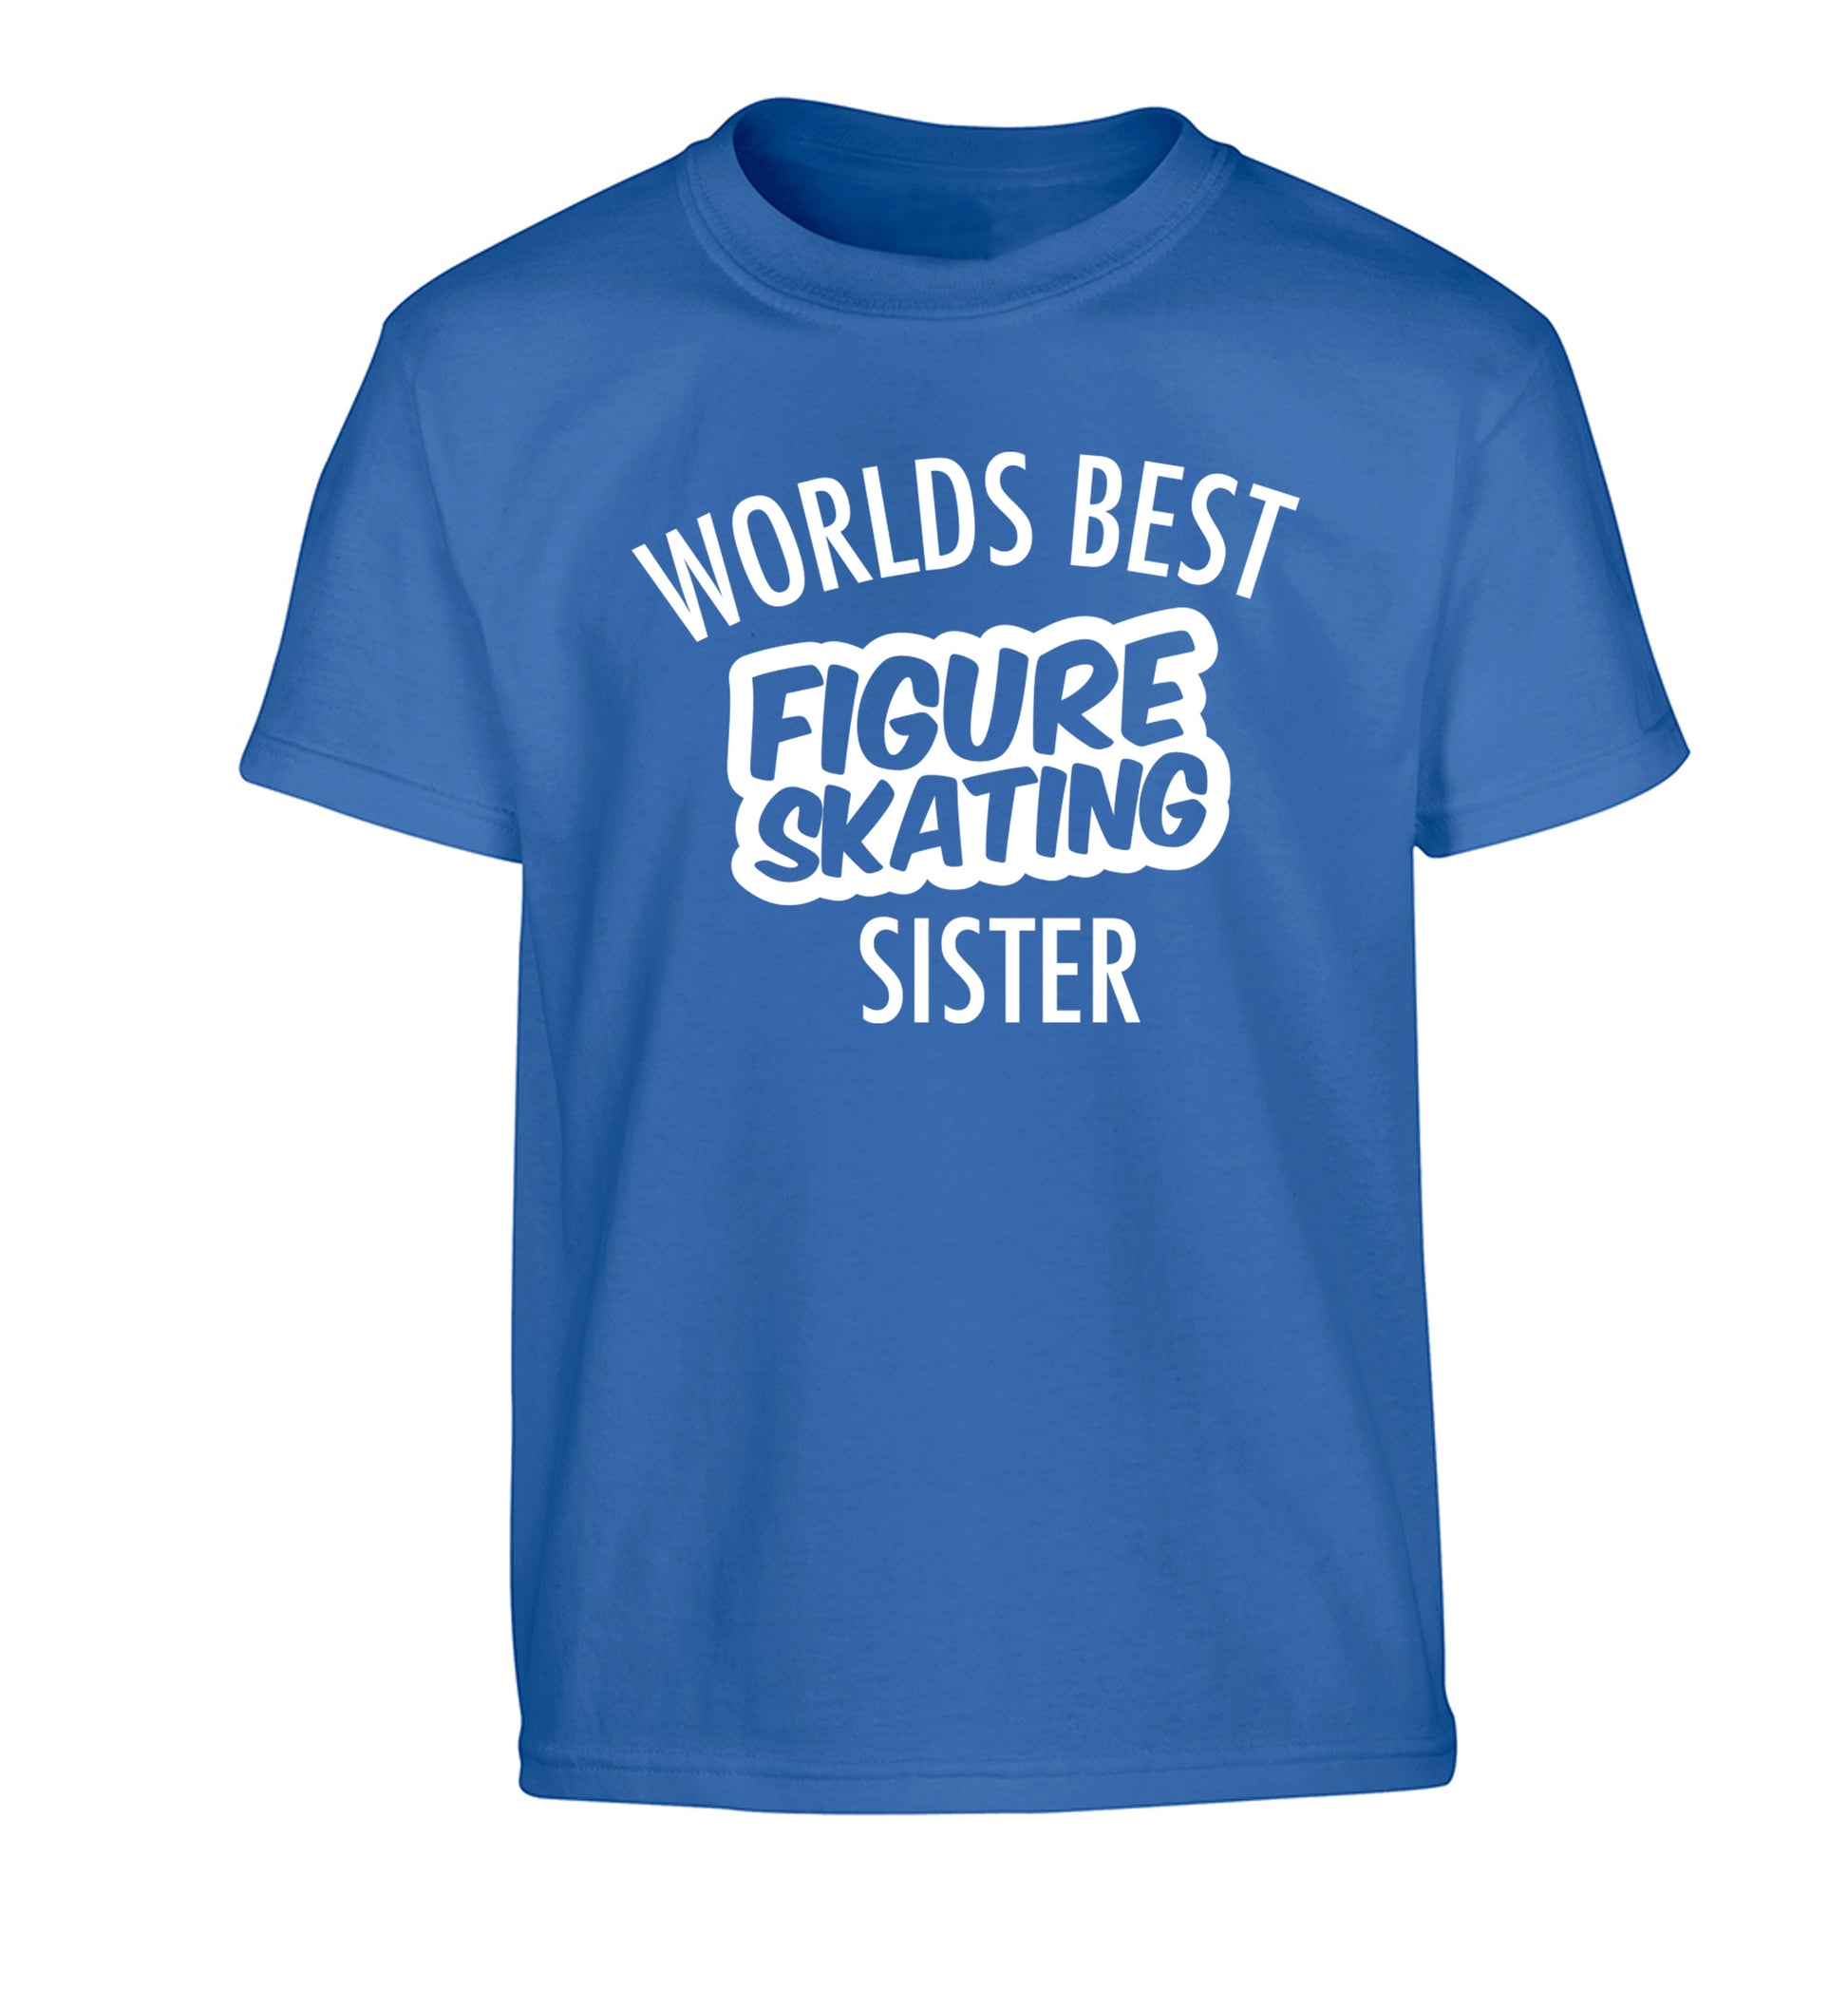 Worlds best figure skating sisterChildren's blue Tshirt 12-14 Years